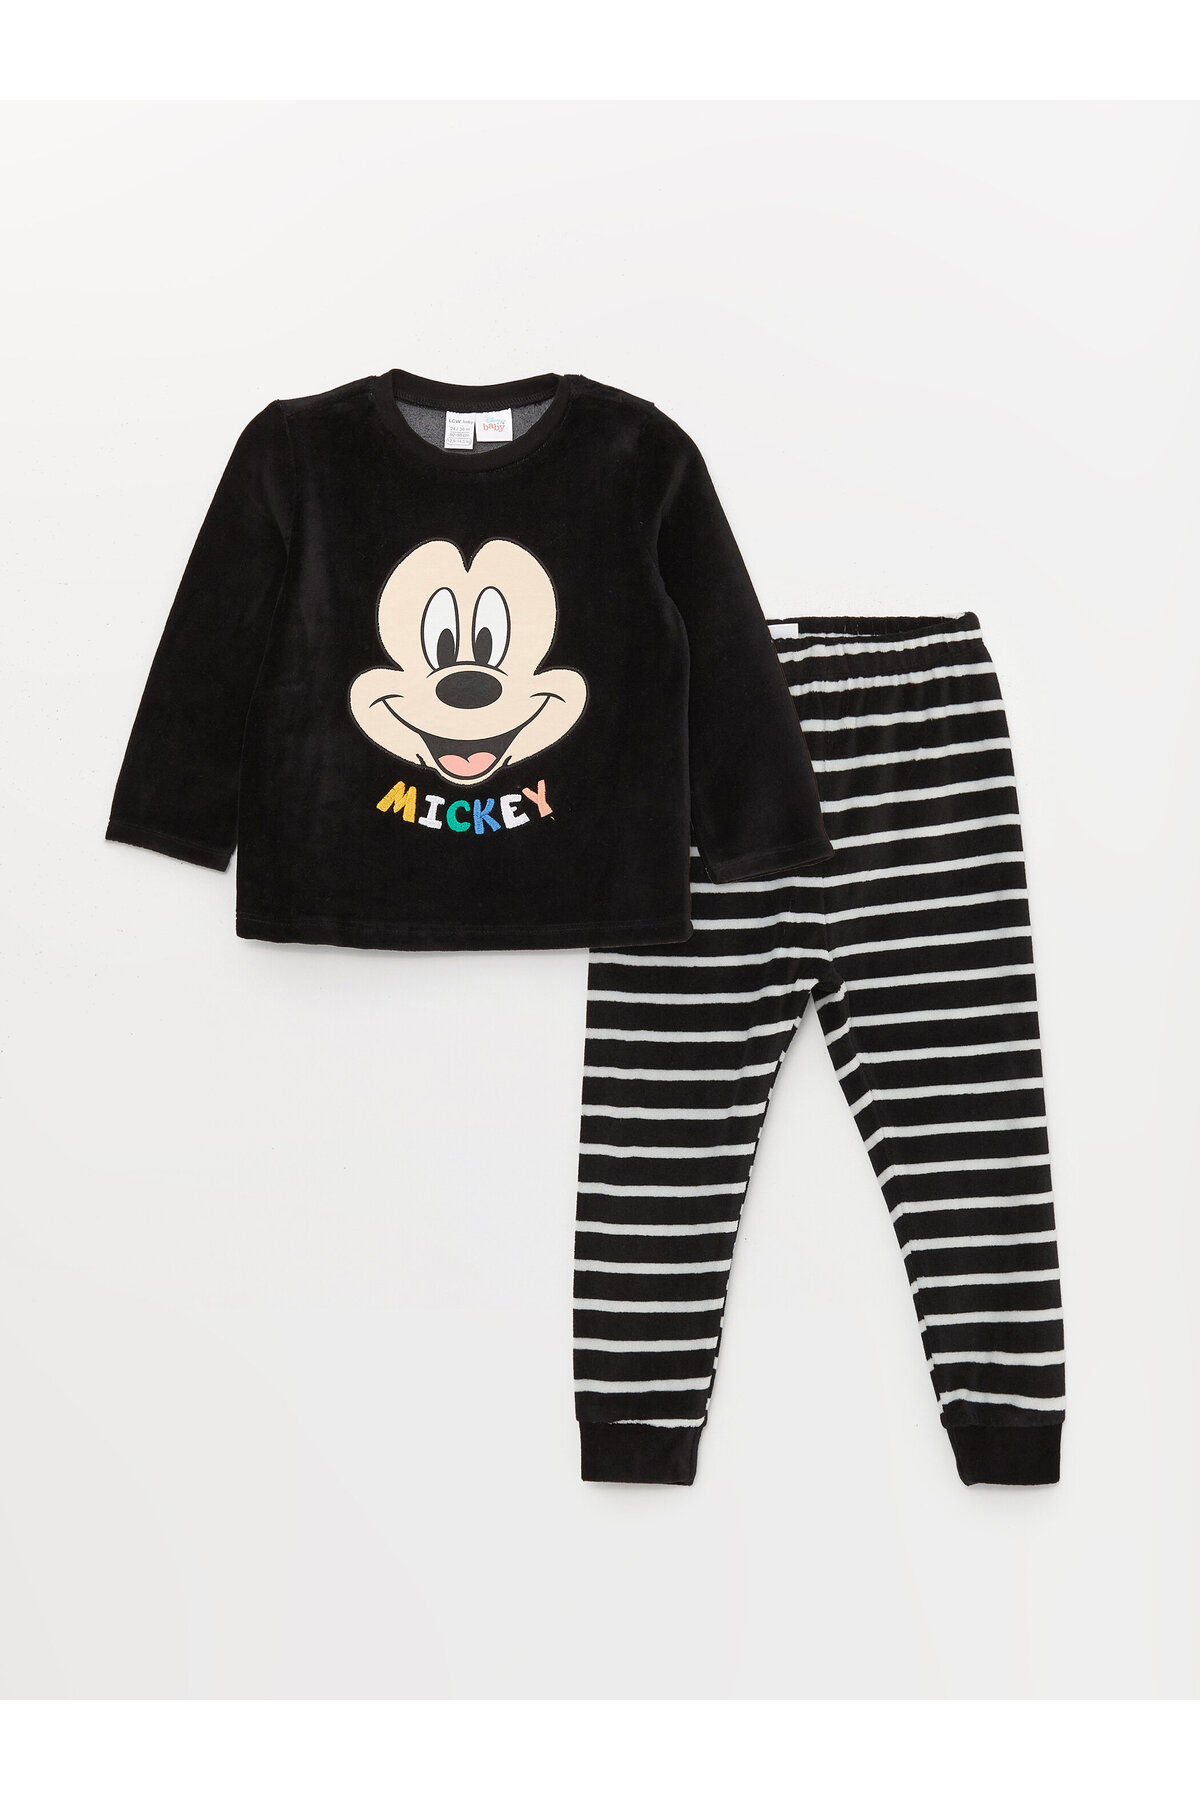 LC Waikiki Crew Neck Long Sleeve Mickey Mouse Embroidered Velvet Baby Boy Pajamas Set